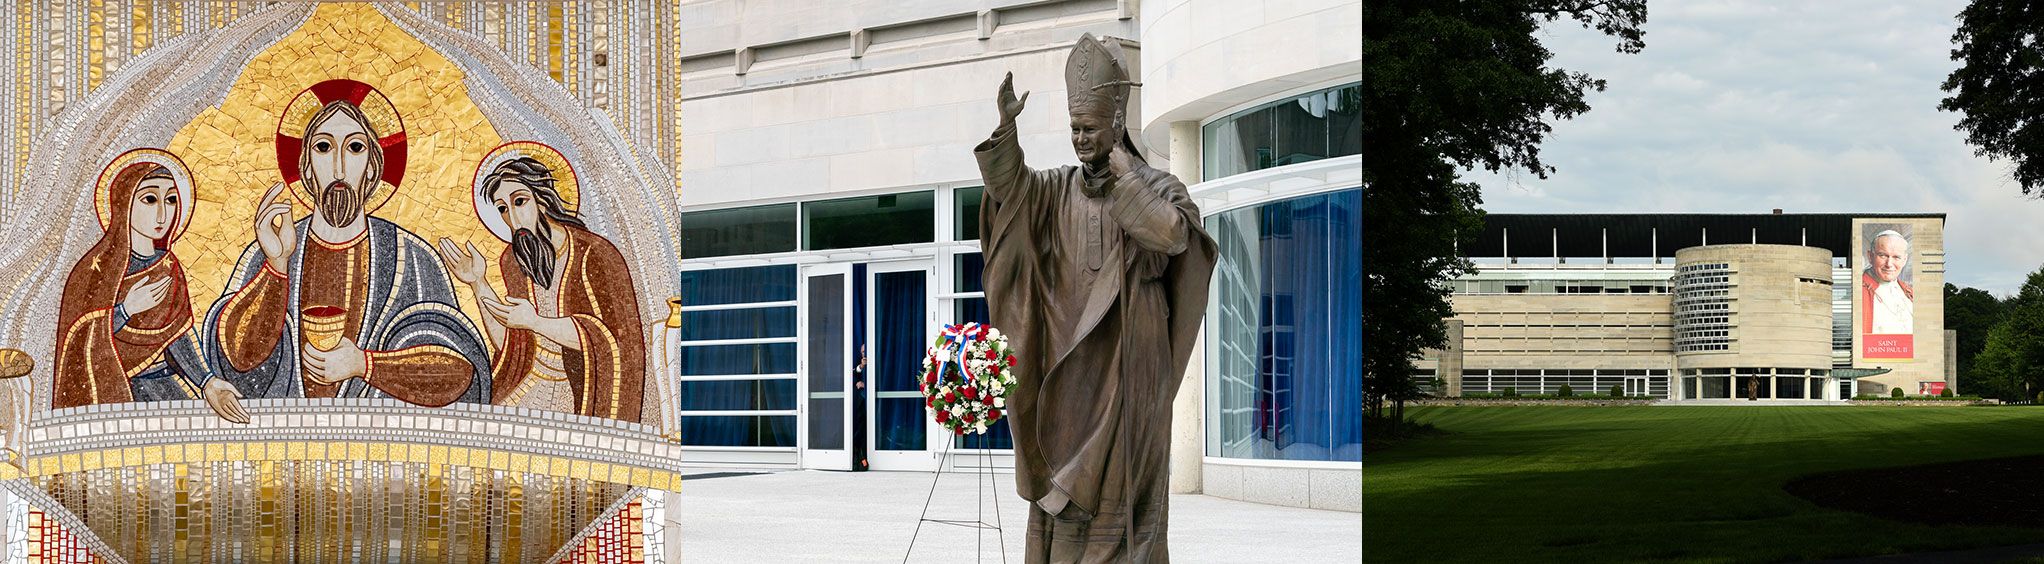 Saint John Paul II National Shrine in Washington, DC